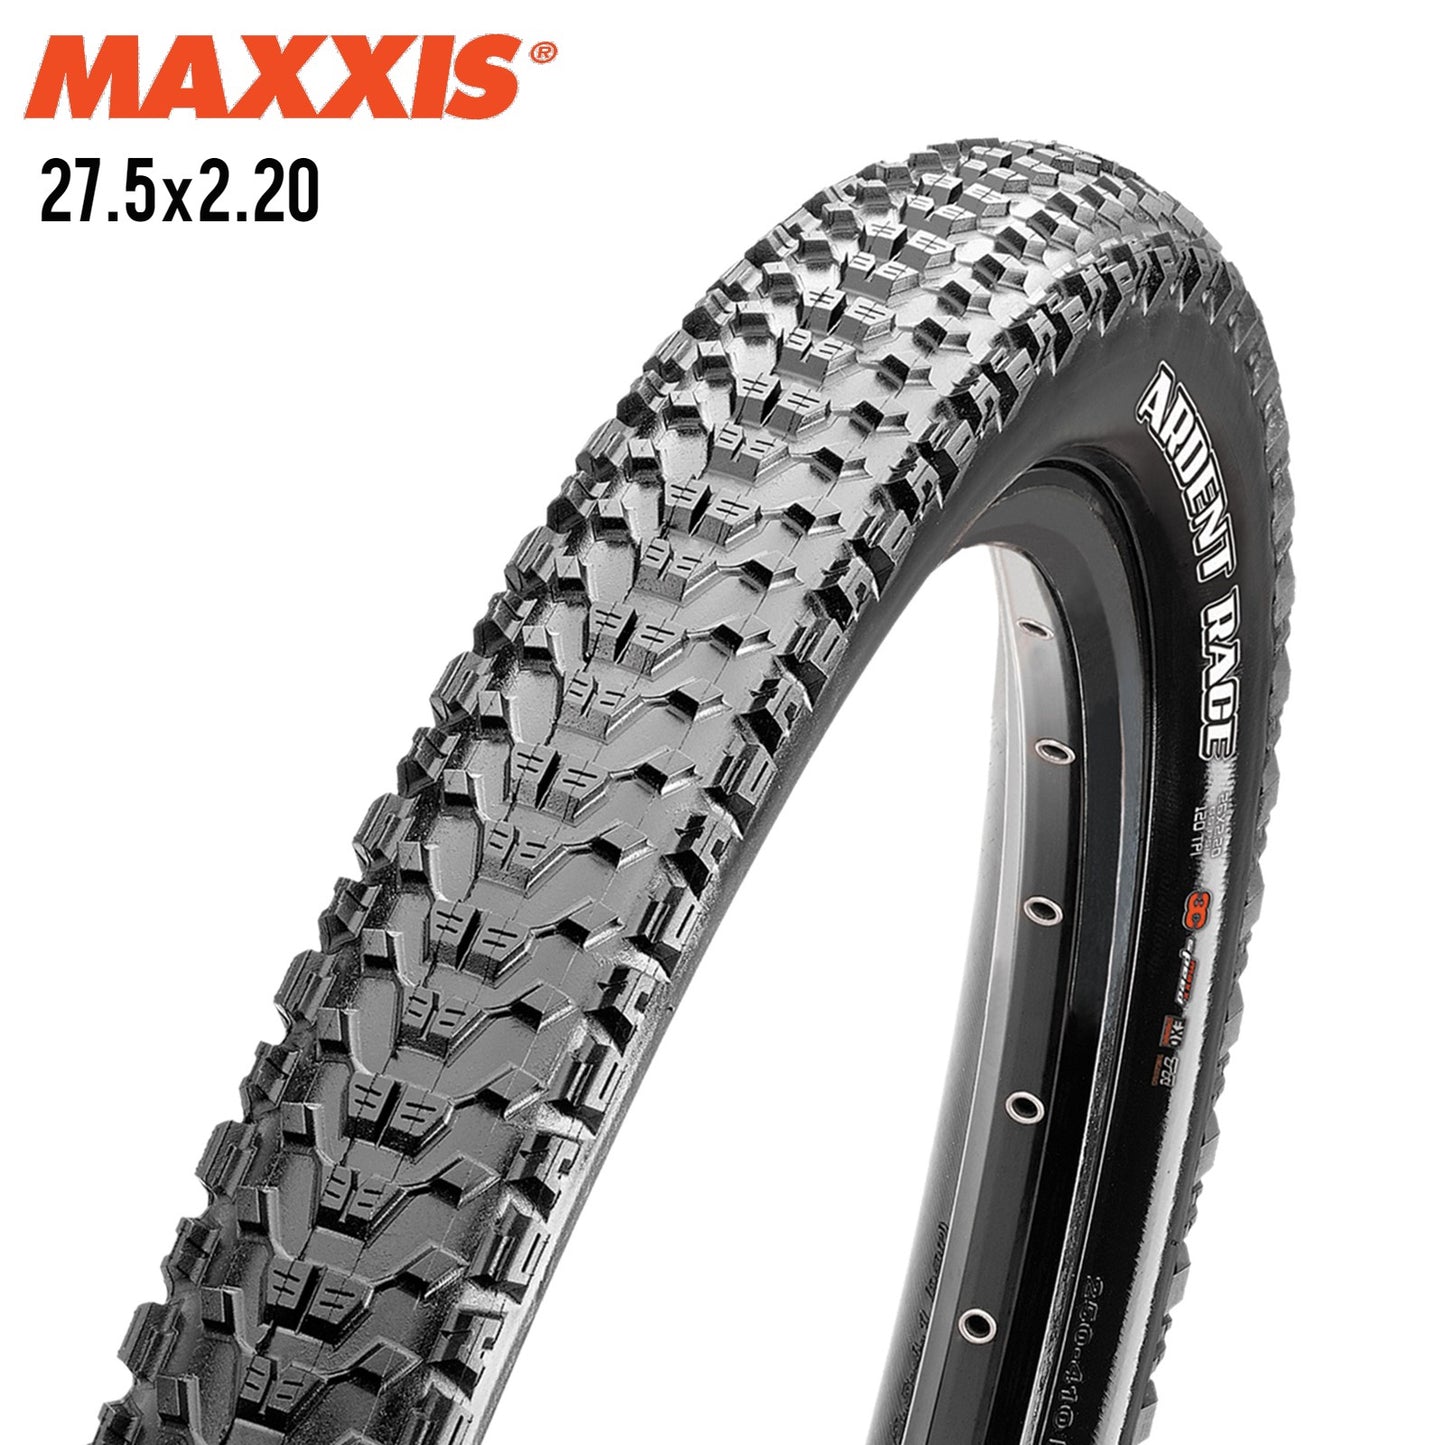 Maxxis Ardent Race XC MTB Tire 27.5 EXO Tubeless Ready - Black